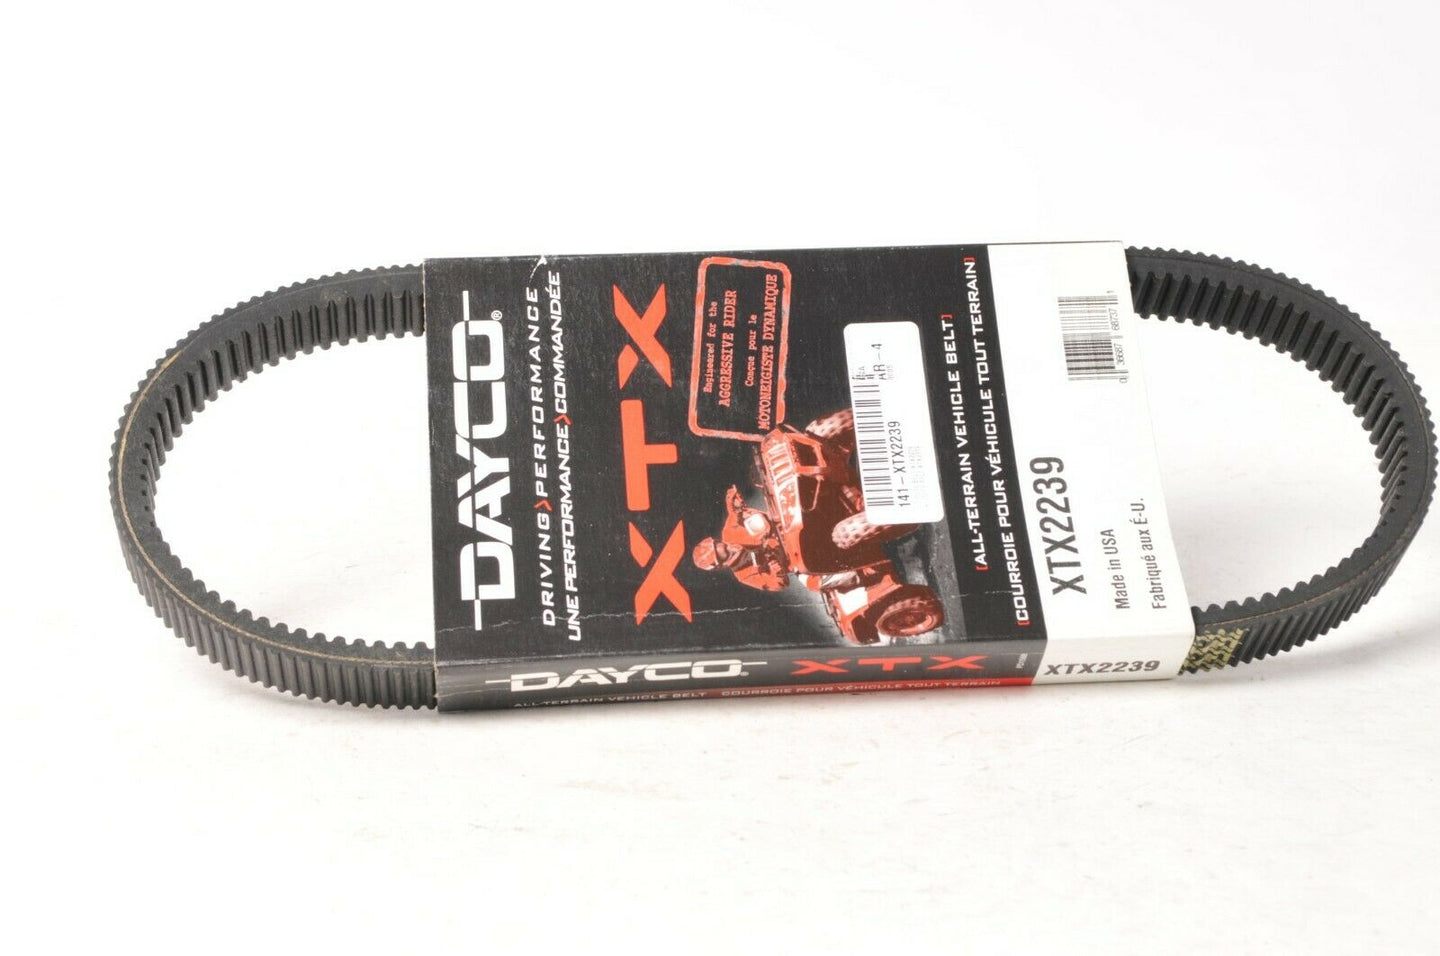 Dayco XTX2239 Drive Belt - Extreme Torque ATV for Polaris Ranger RZR Sportsman +